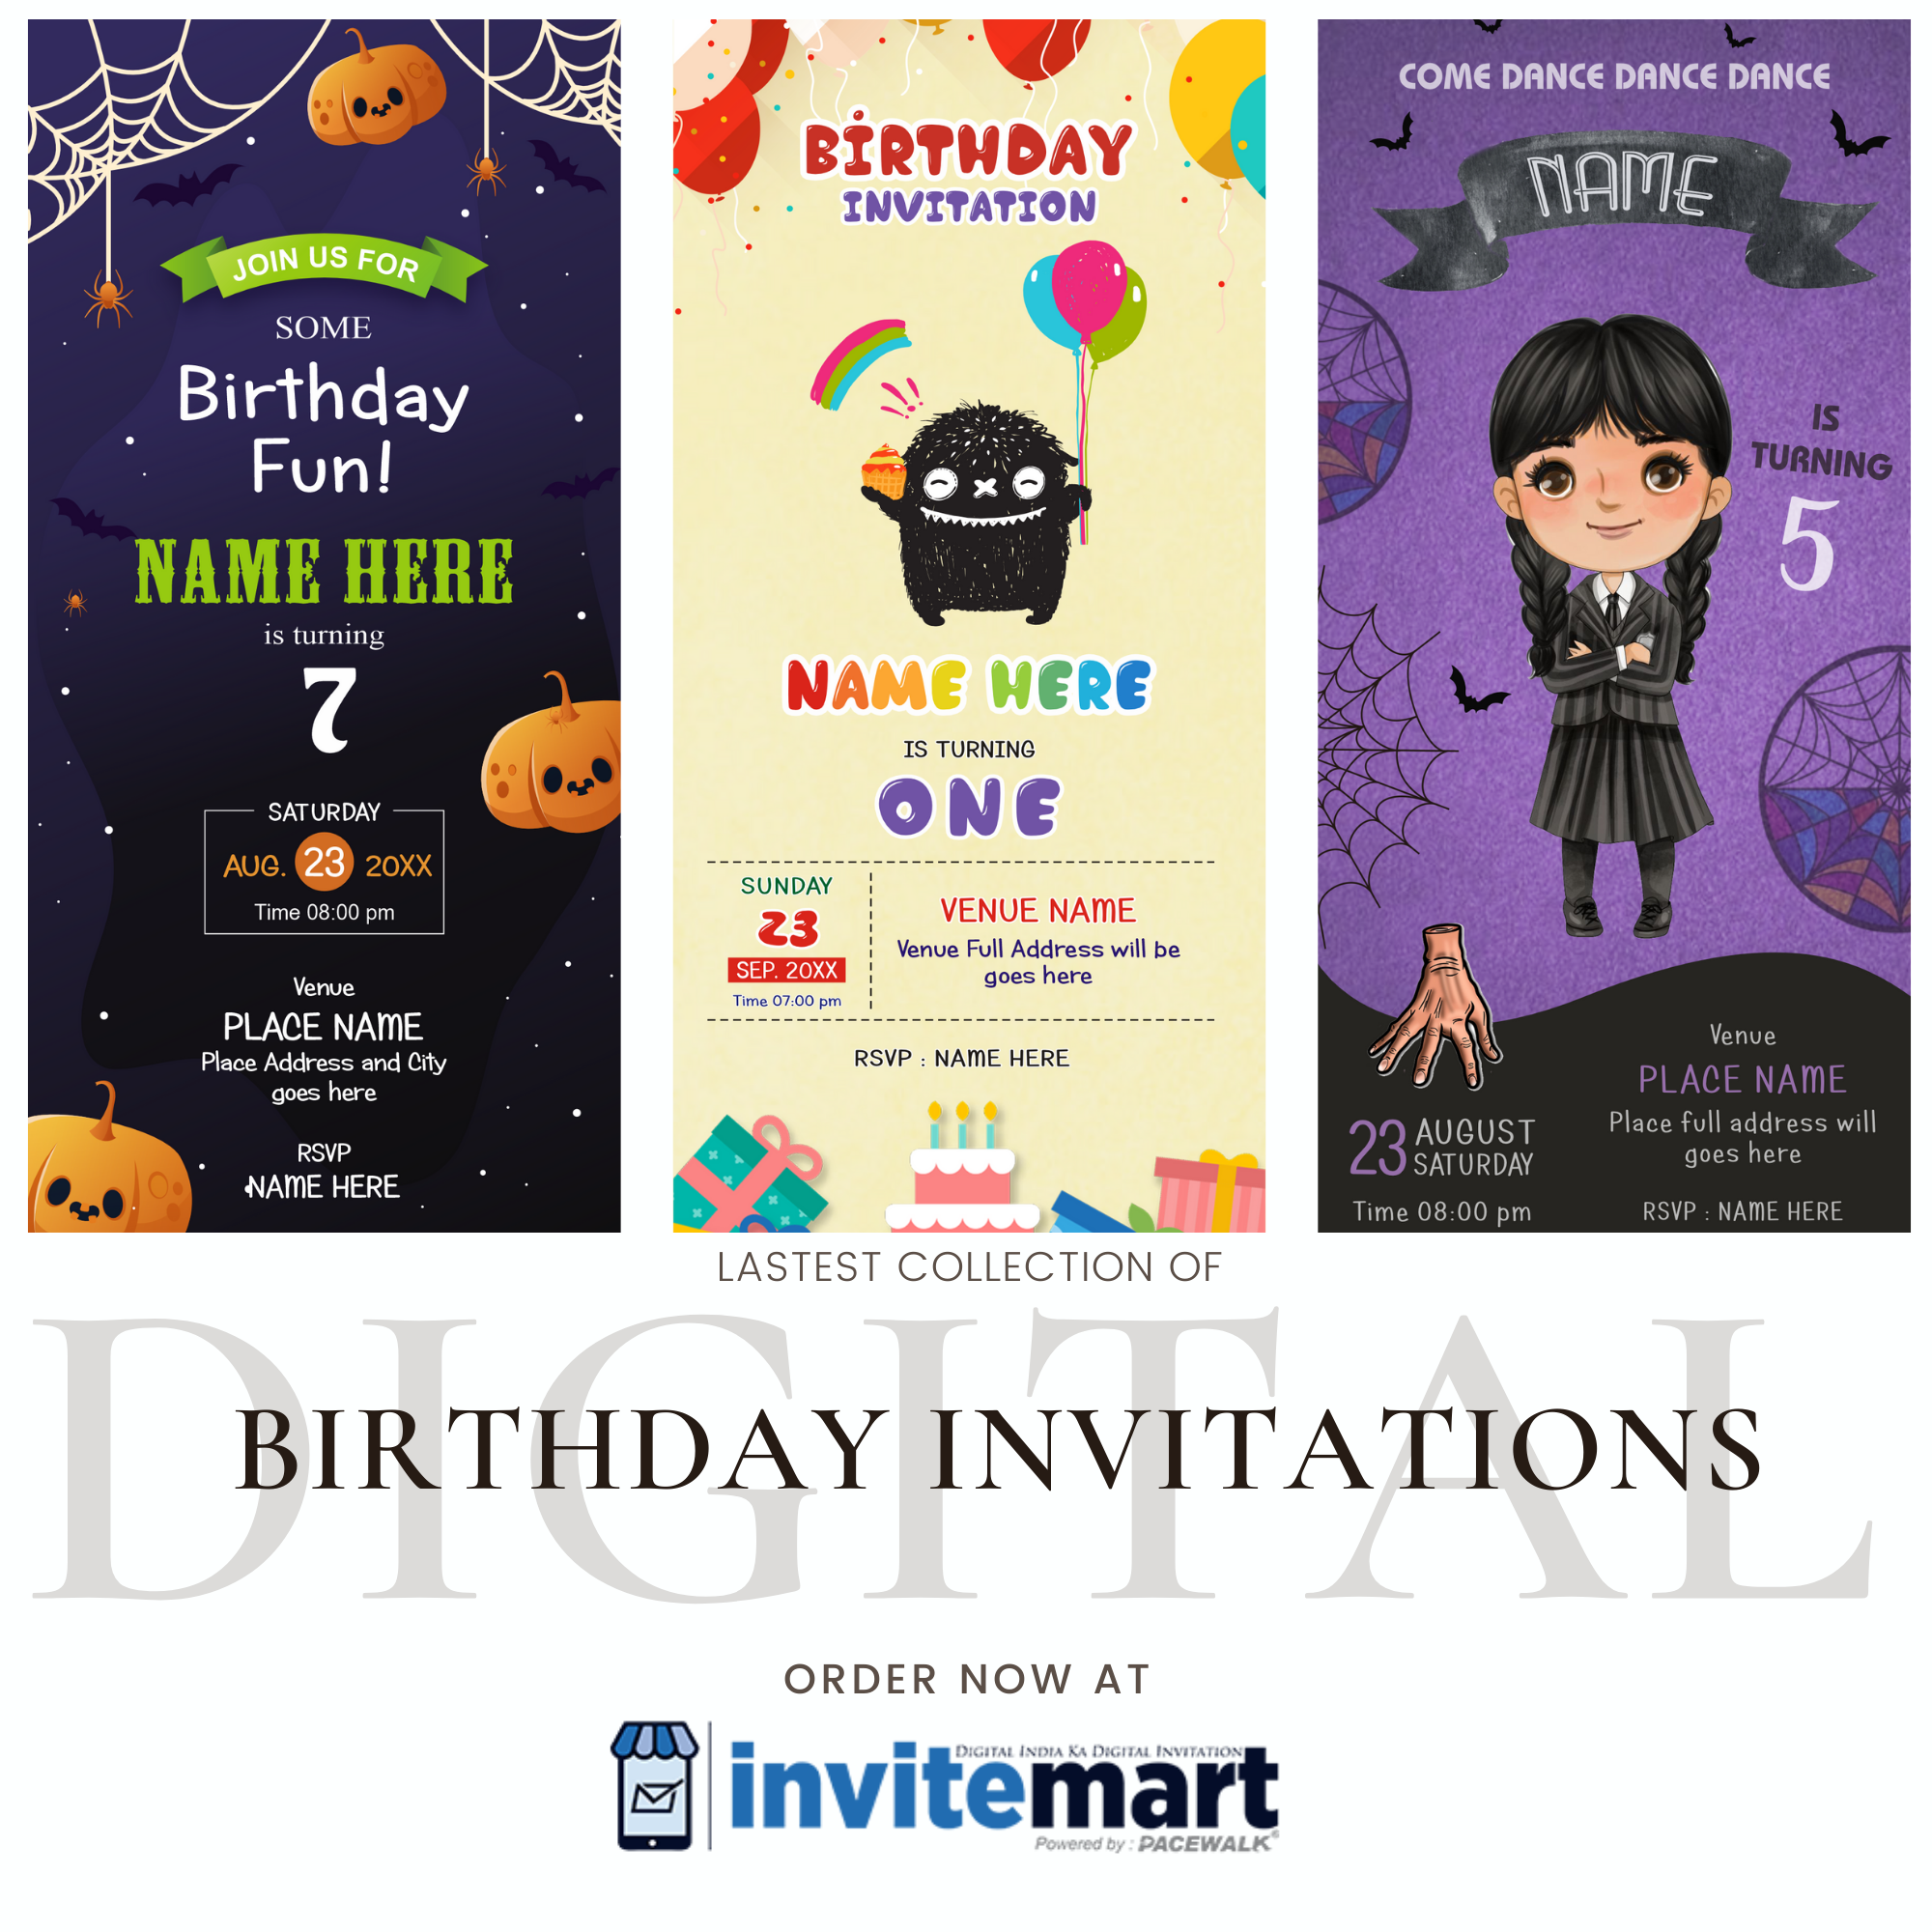 Birthday Invitation Cards & Templates